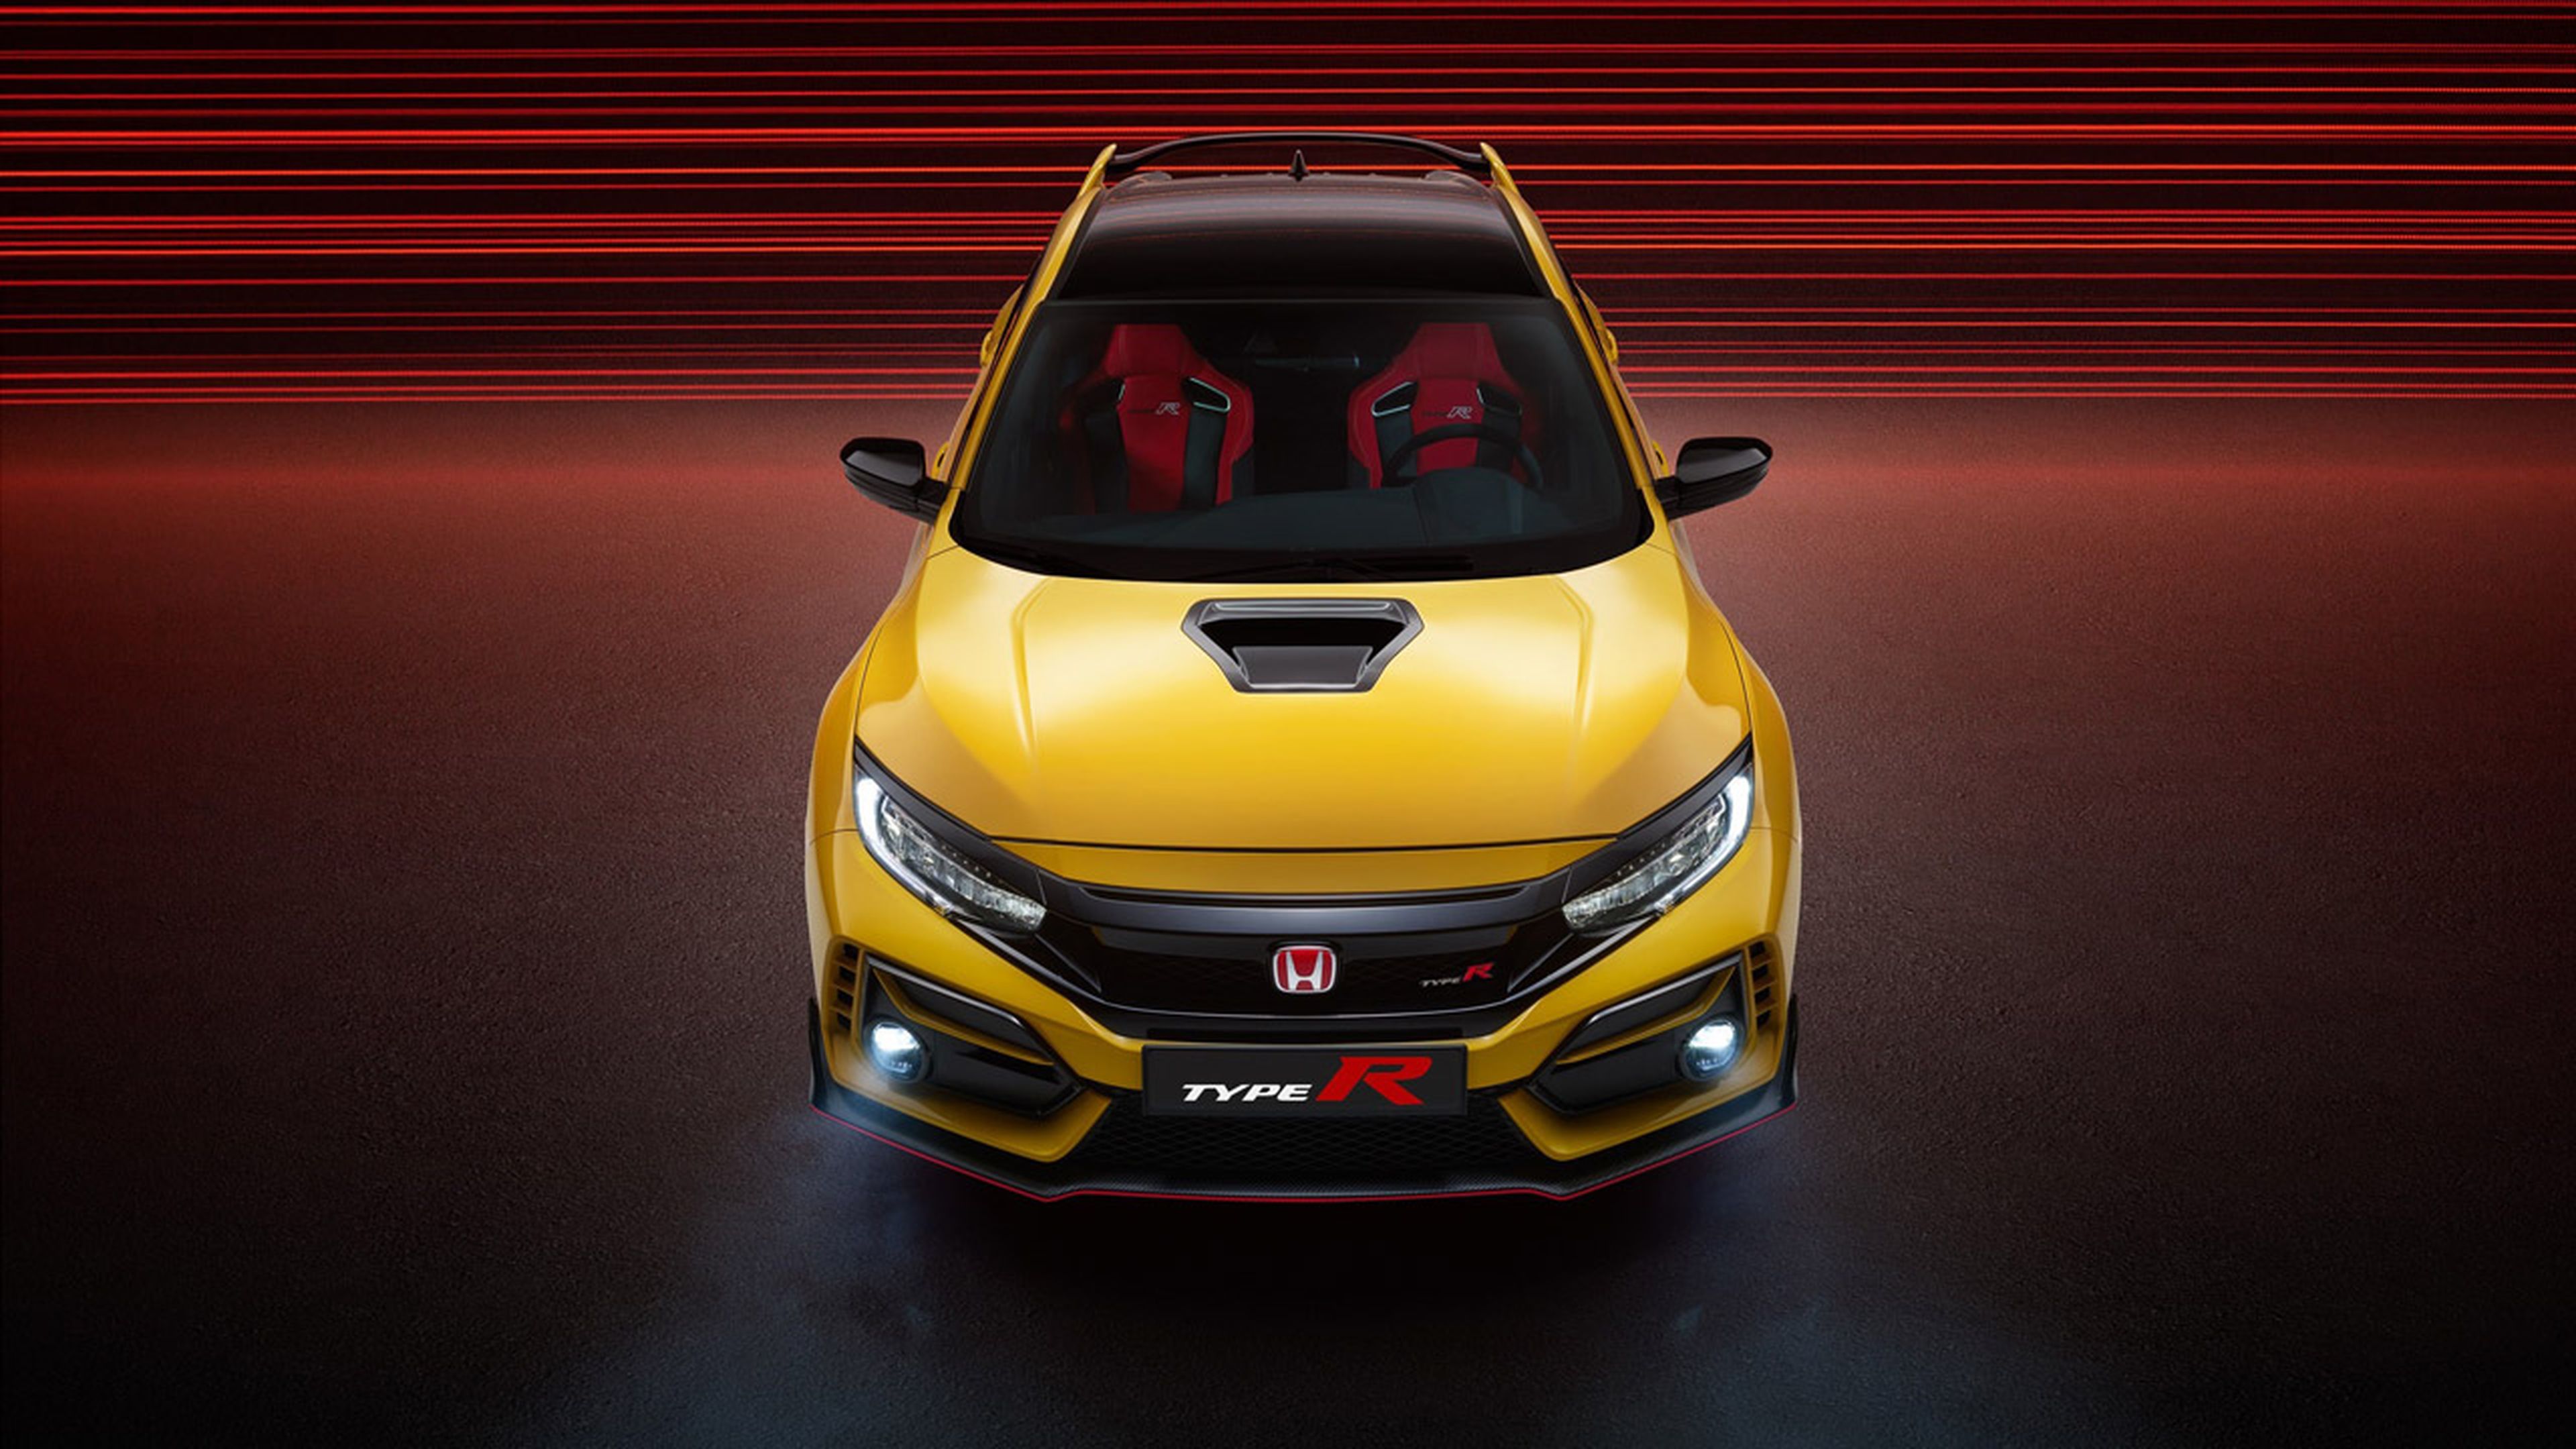 Honda Civic Type-R Limited Edition